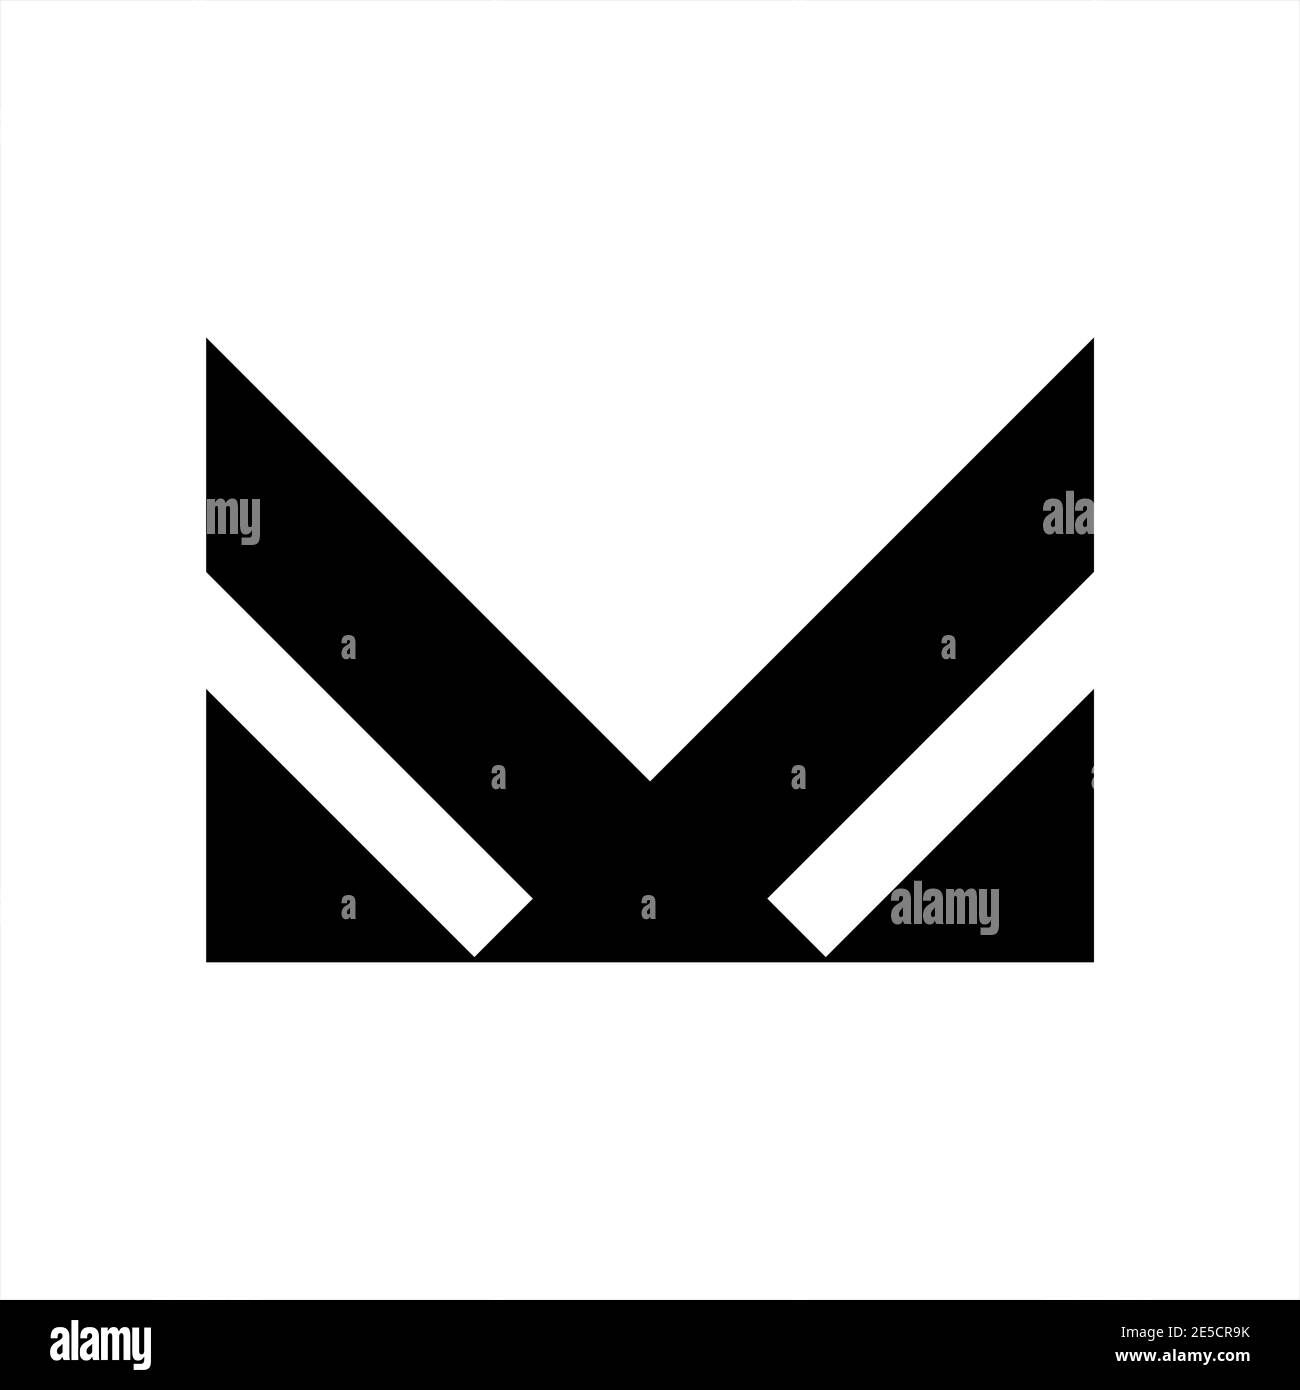 mv, vm initials geometric letter company logo Stock Vector